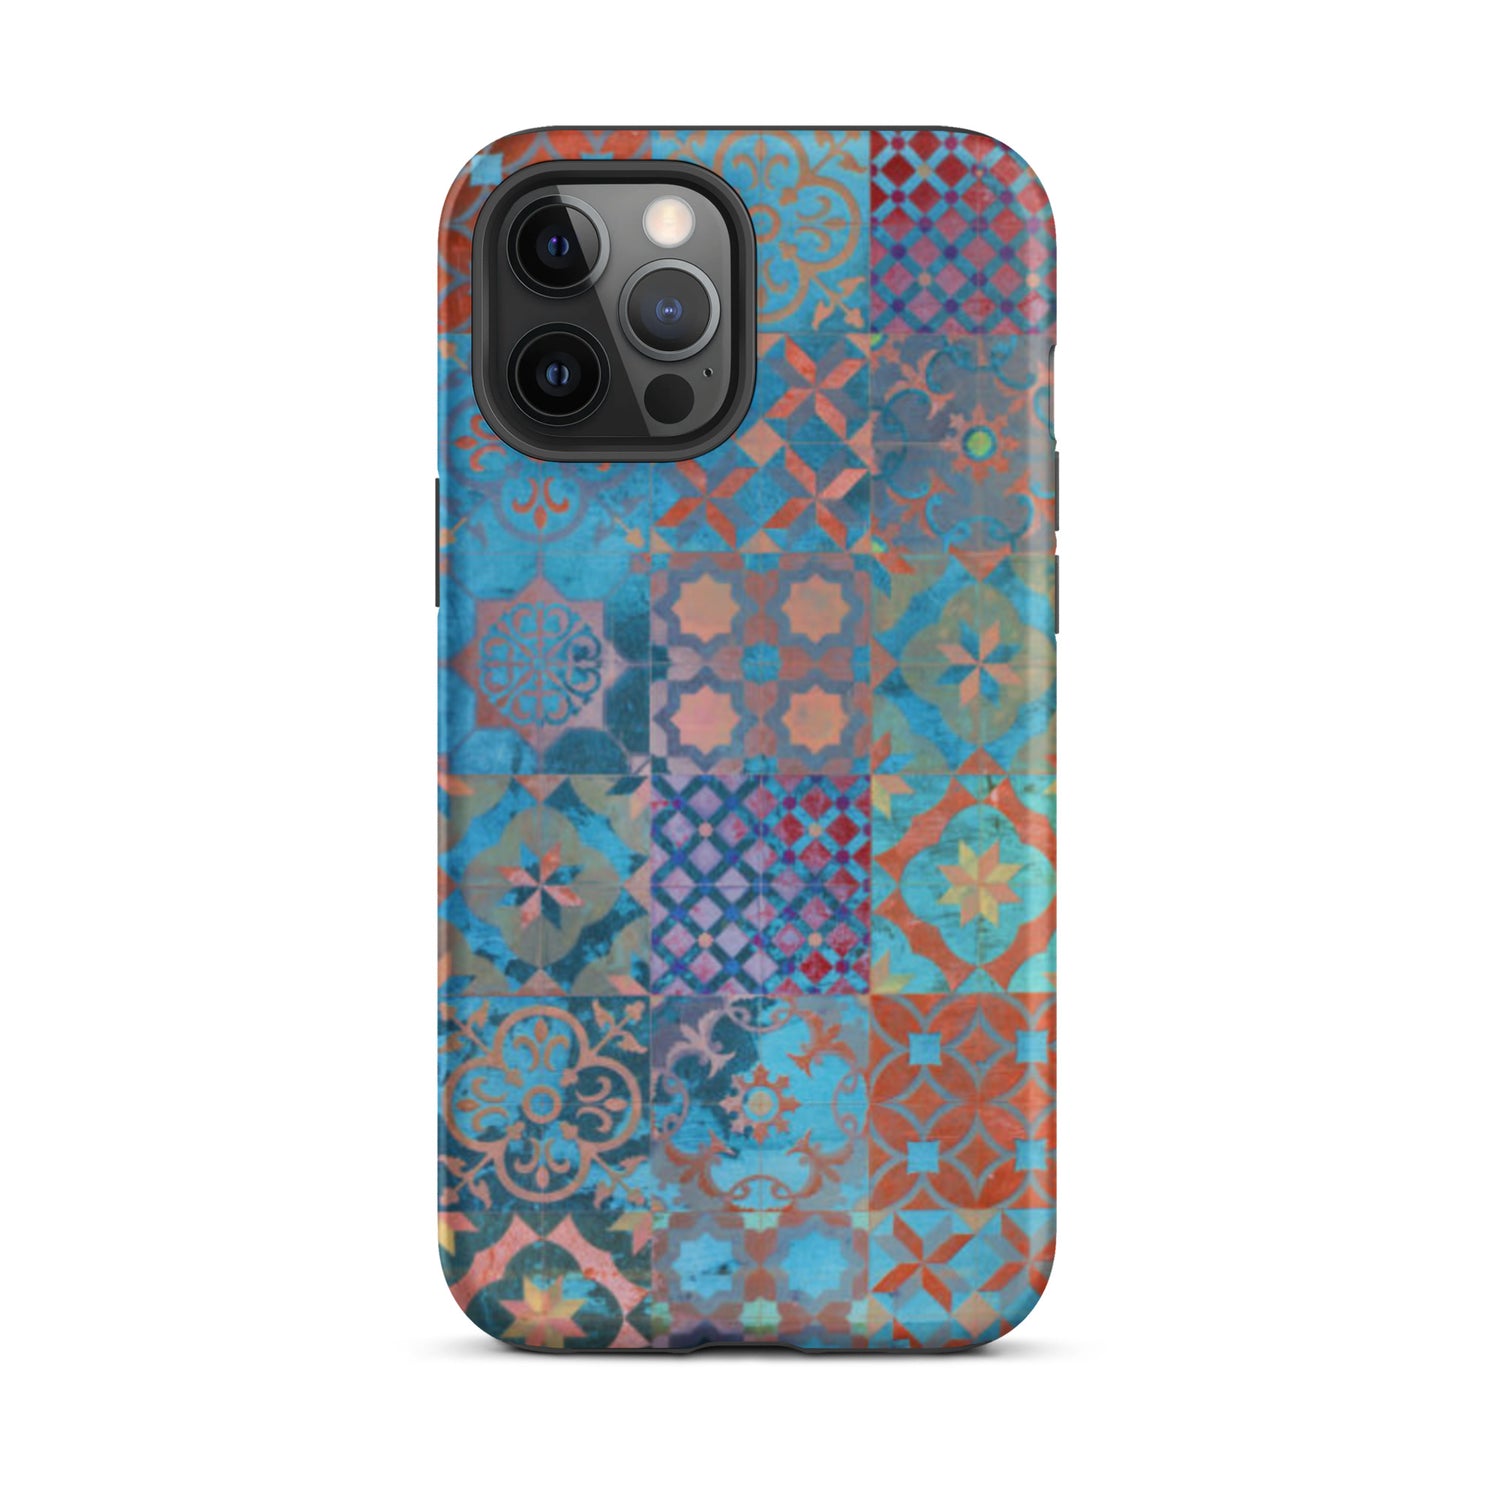 Moroccan Tile Tough iPhone 12 Pro Max case